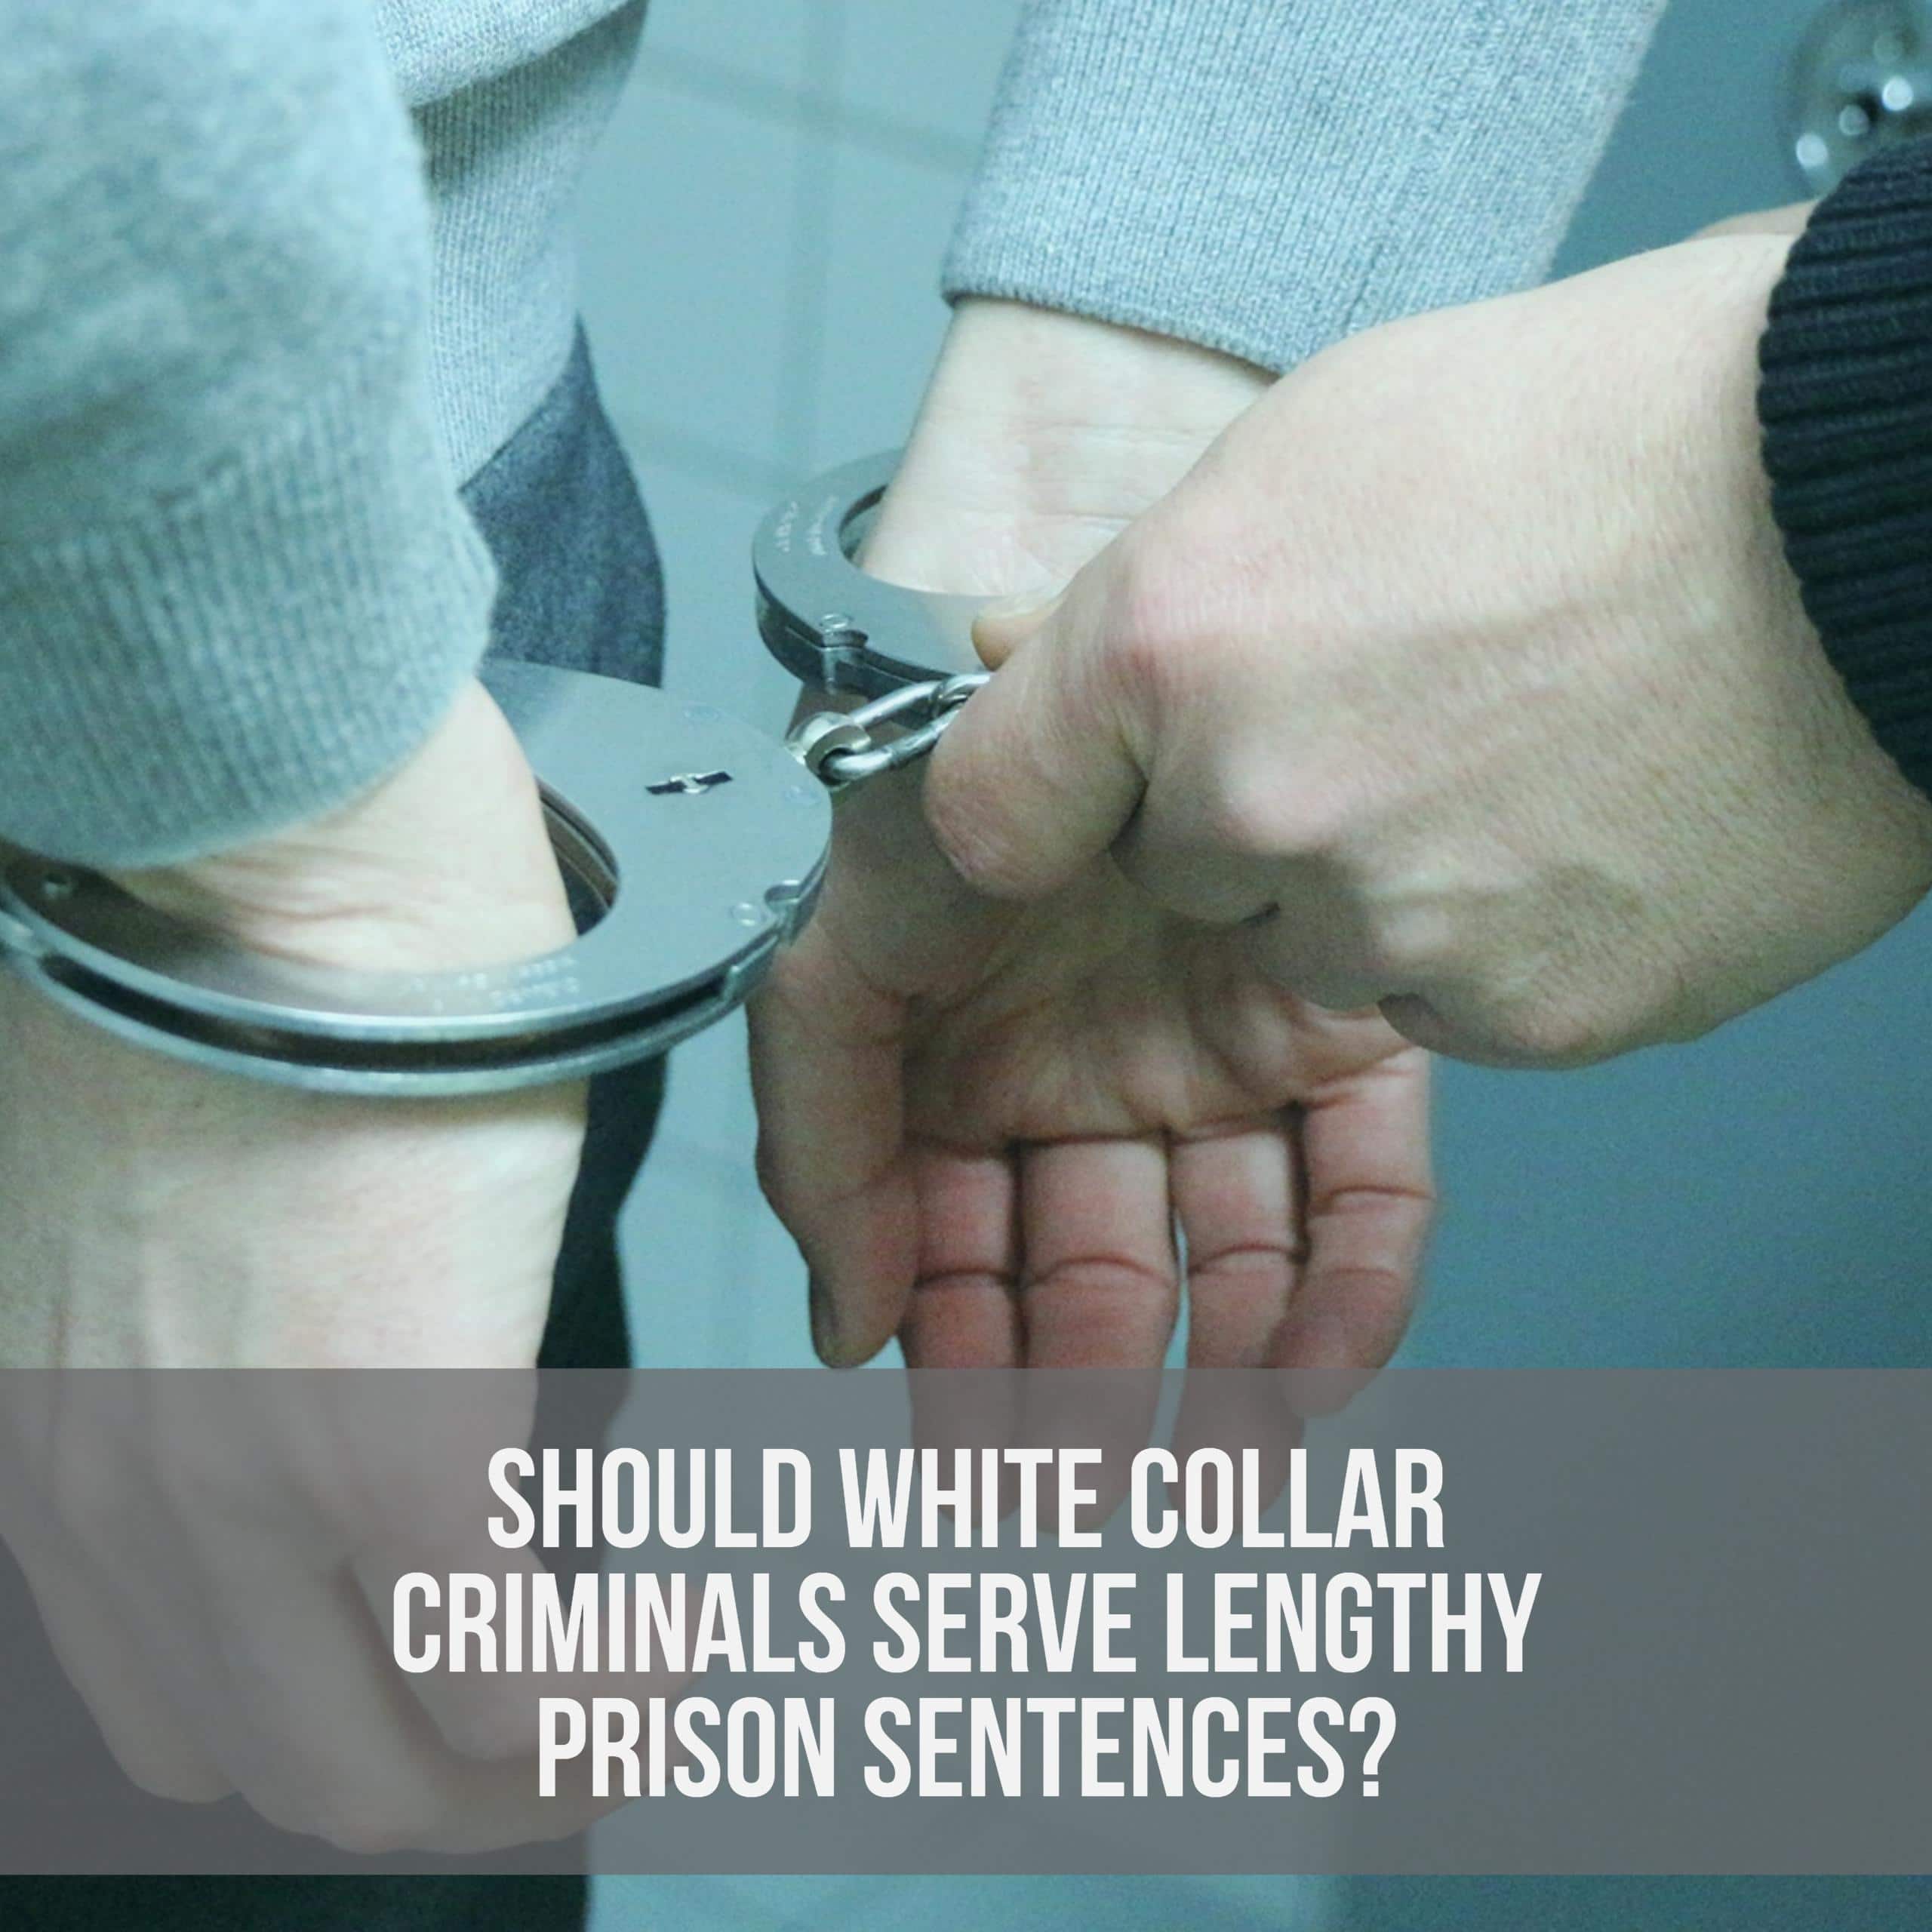 Dallas White Crime Lawyers Explains White Collar Crime Should Criminals Do the Time